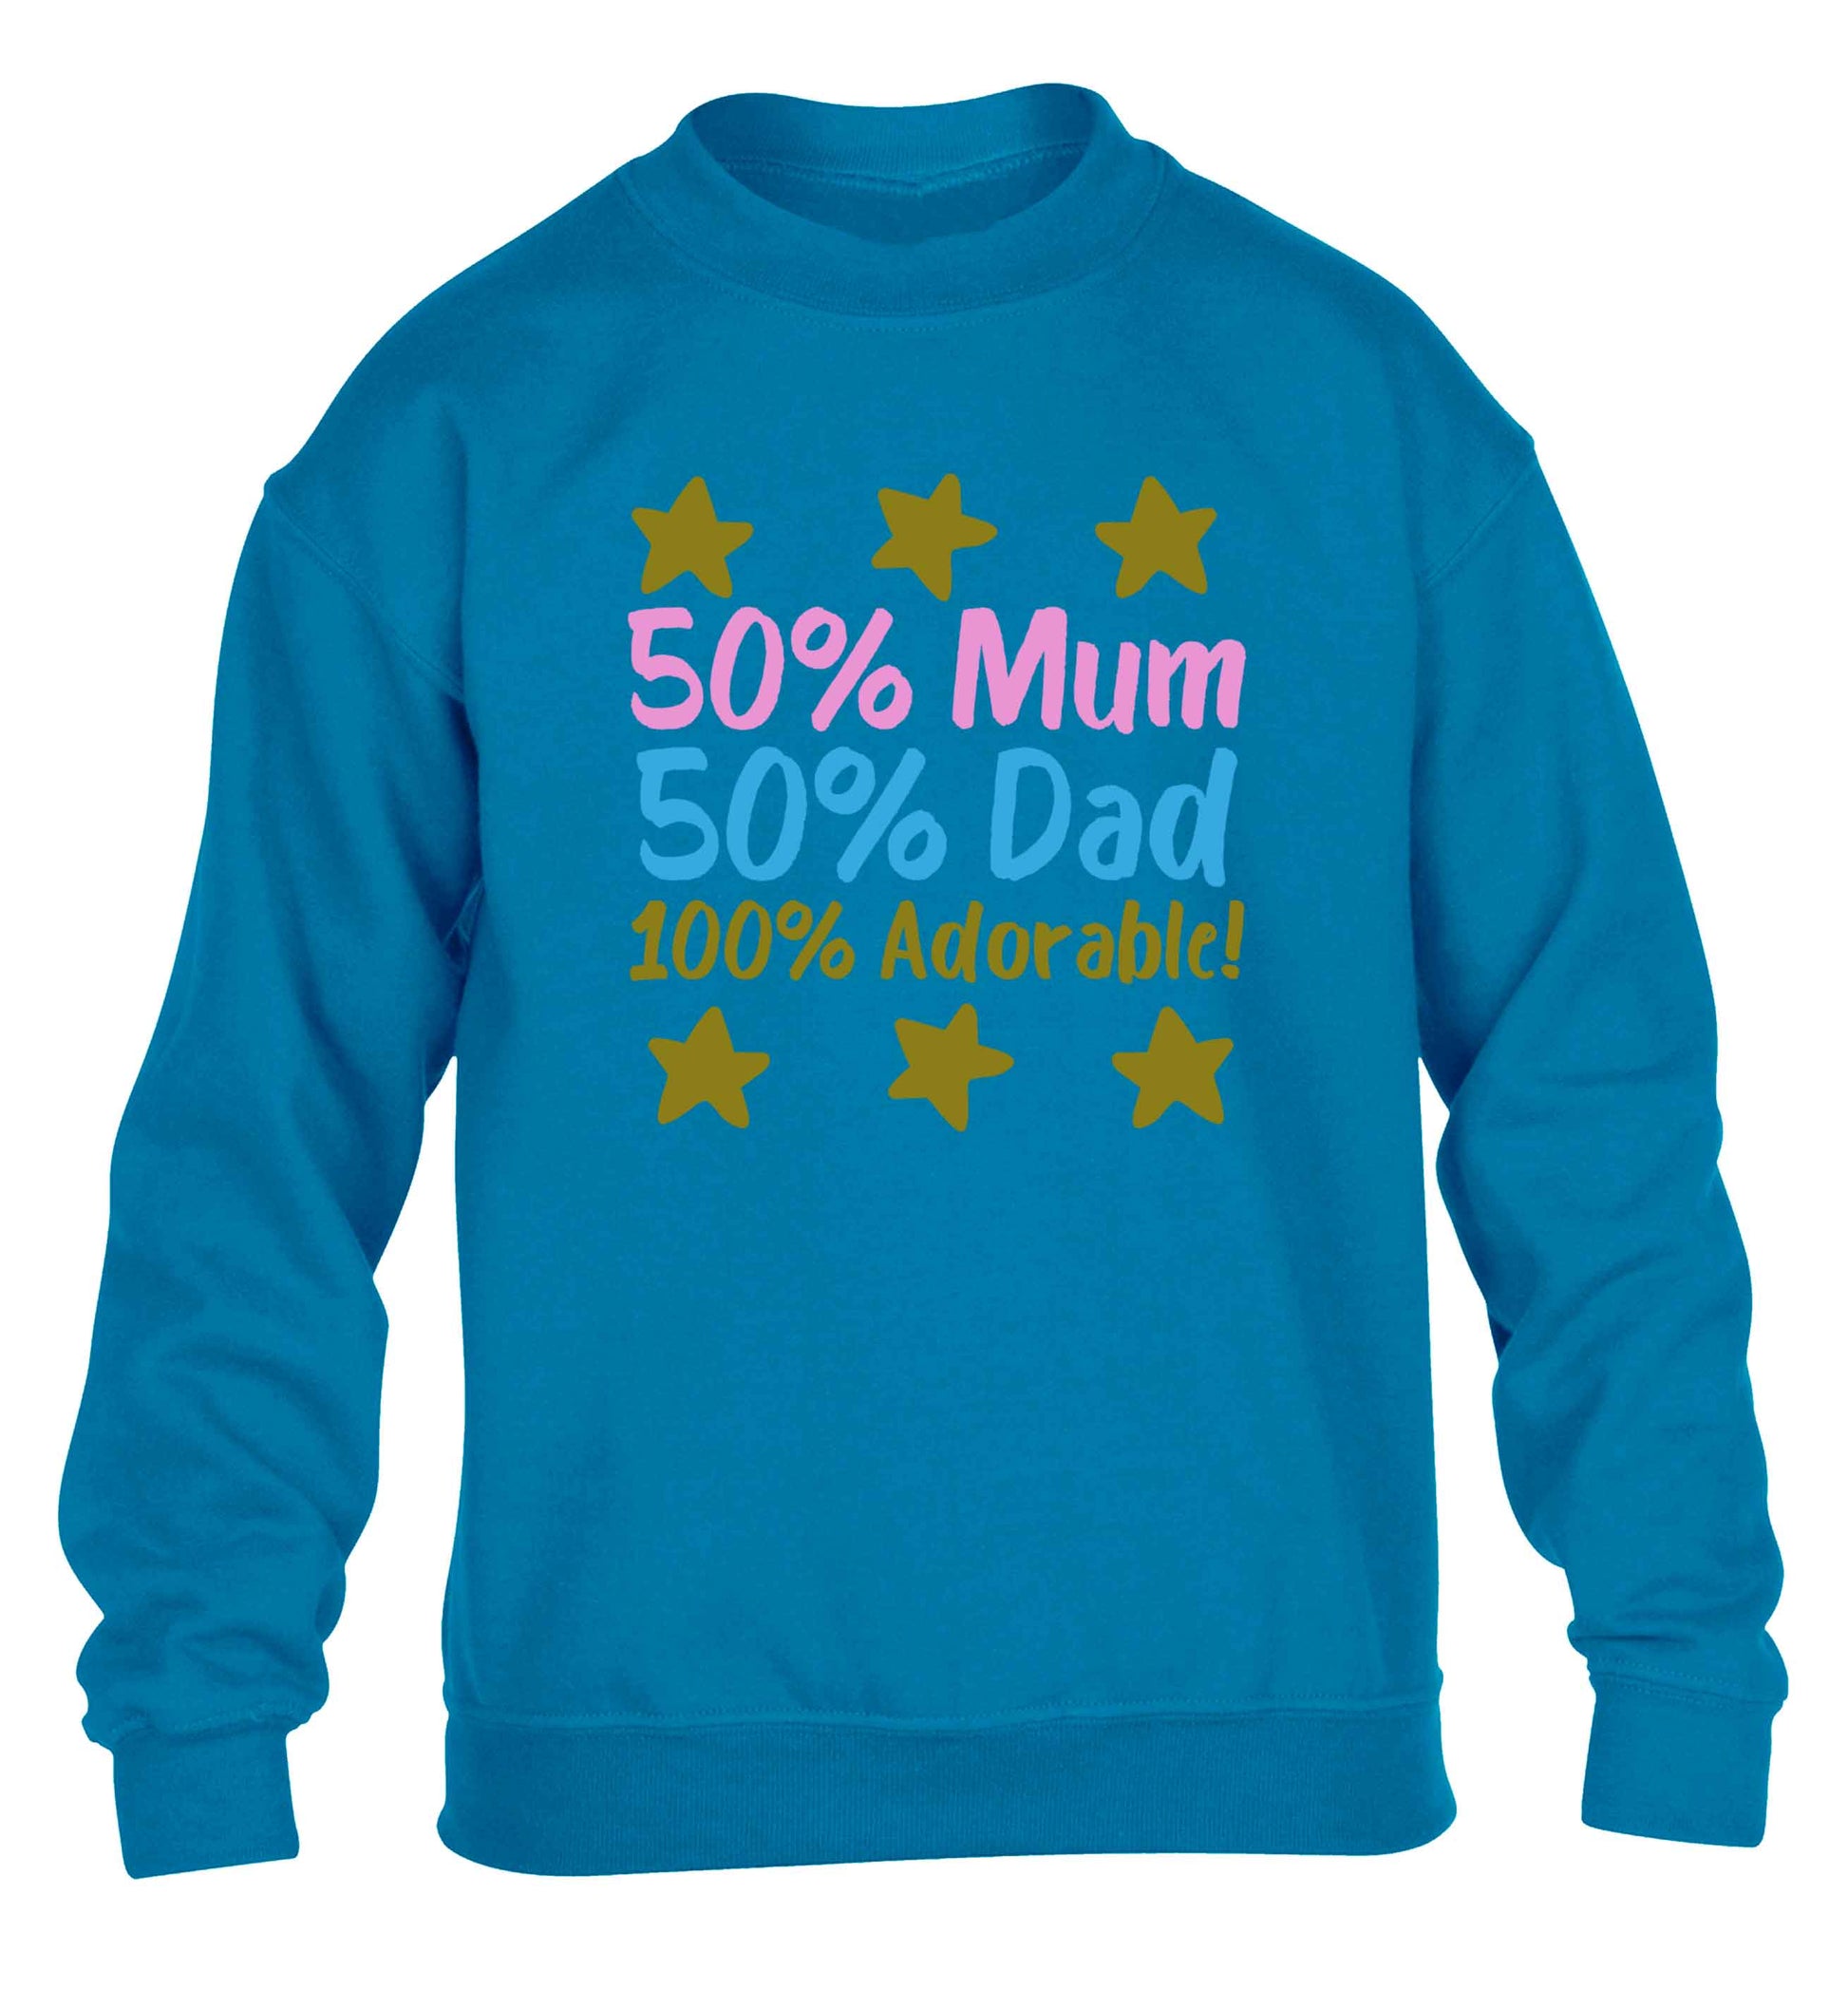 50% mum 50% dad 100% adorable children's blue sweater 12-13 Years